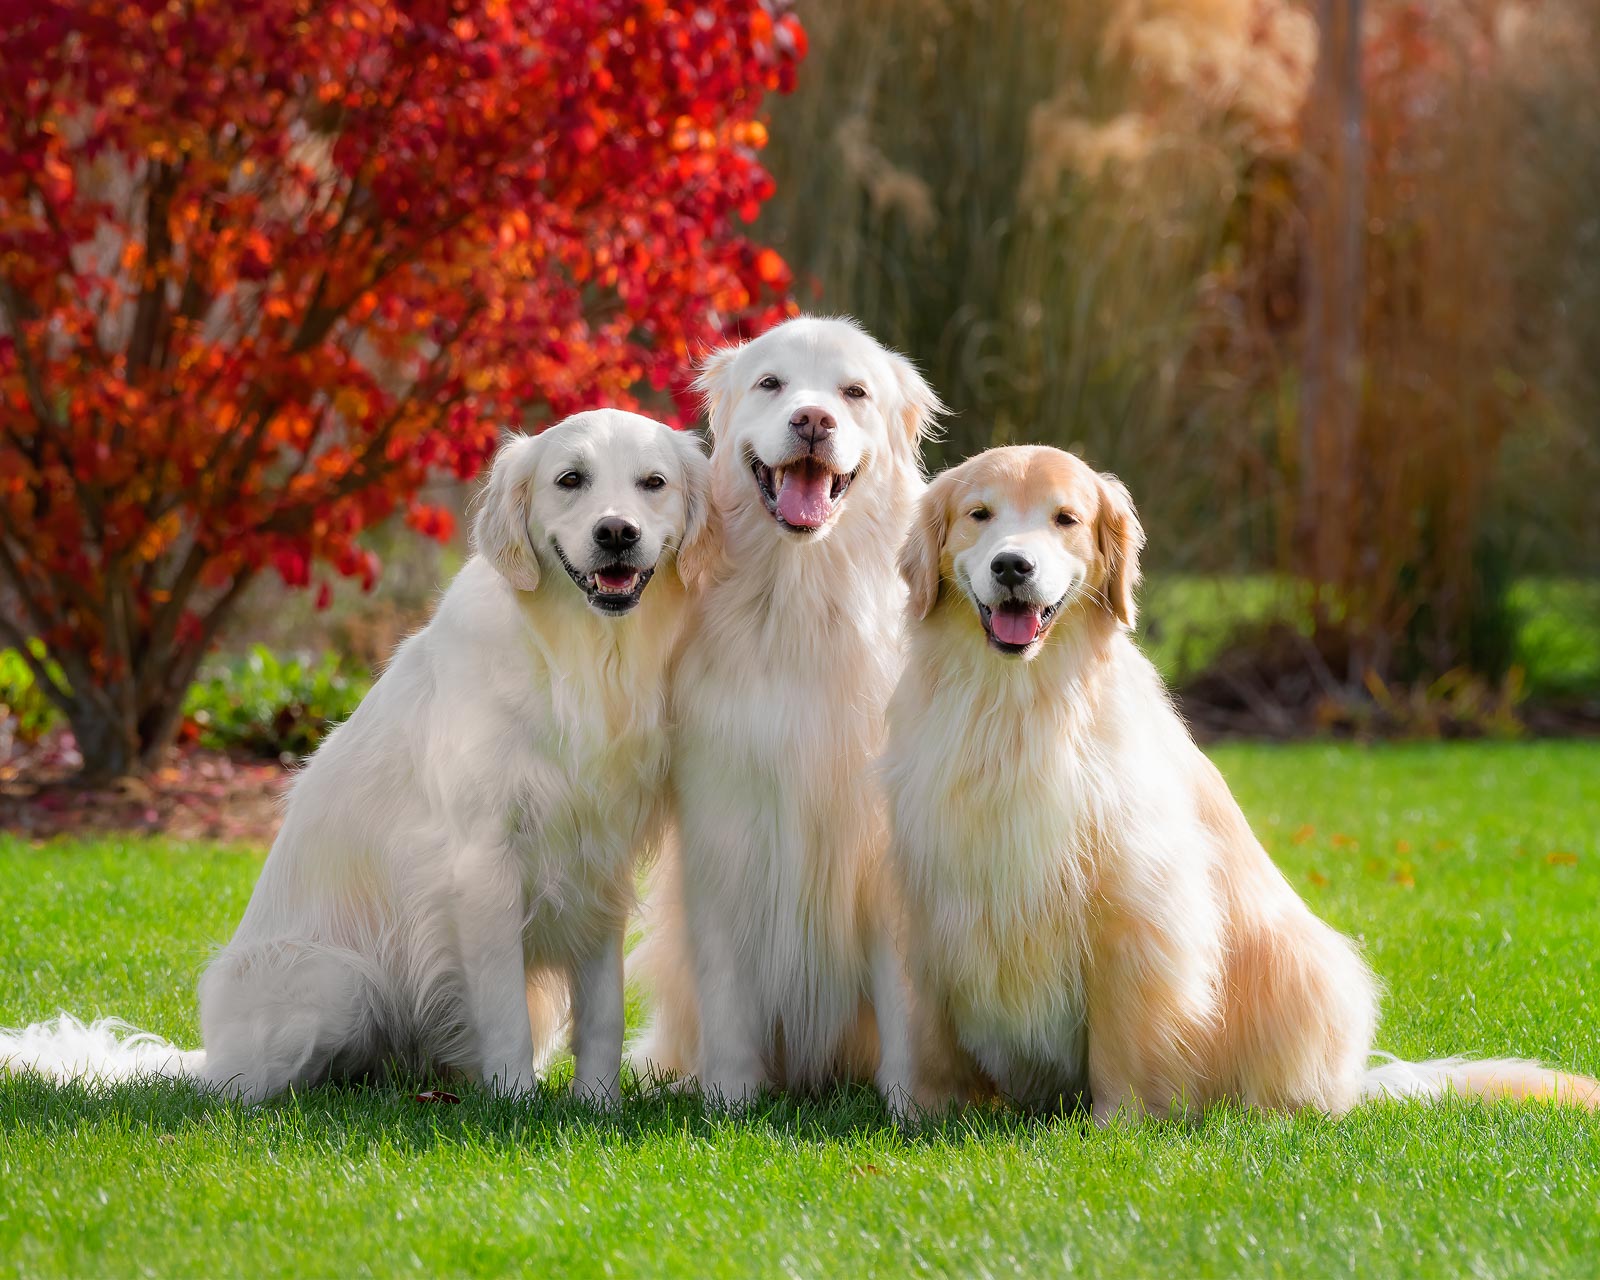 Three Golden Retrievers smiling on an autumn day